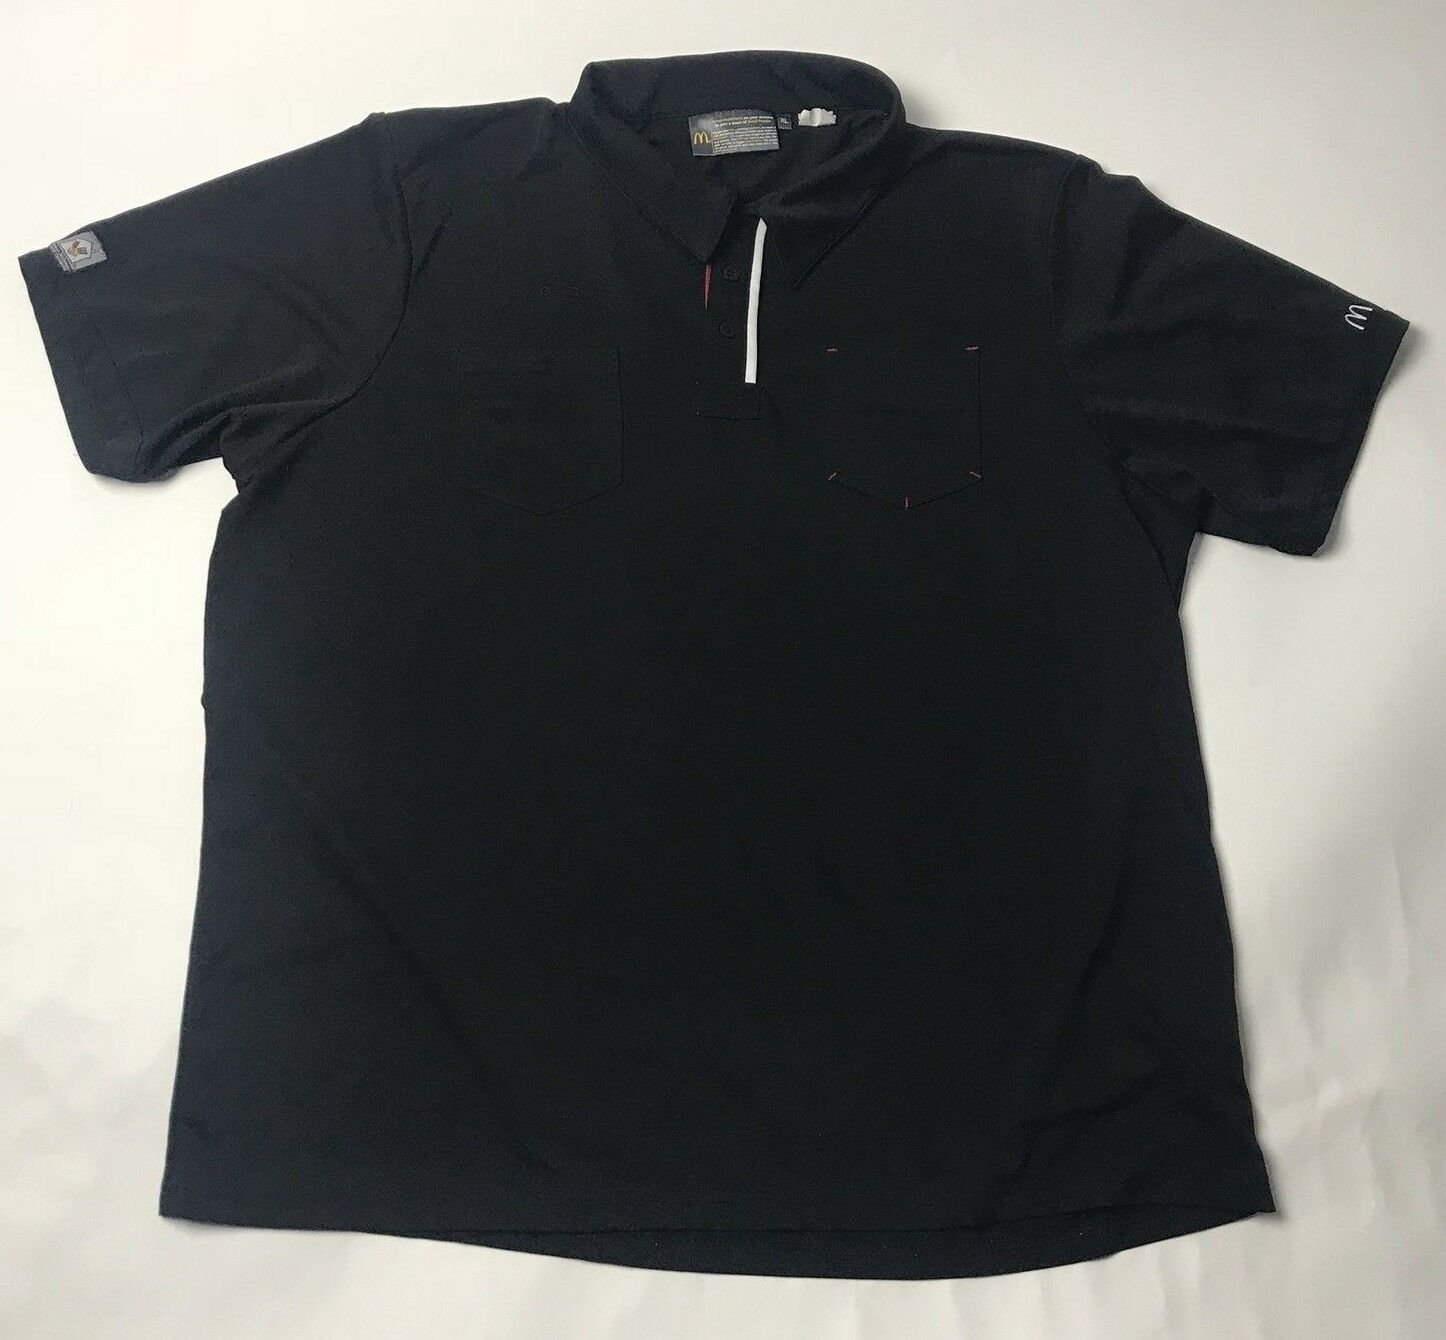 McDonalds Restaurant Polo Shirt Work Uniform Black Size XL Short Sleeve B